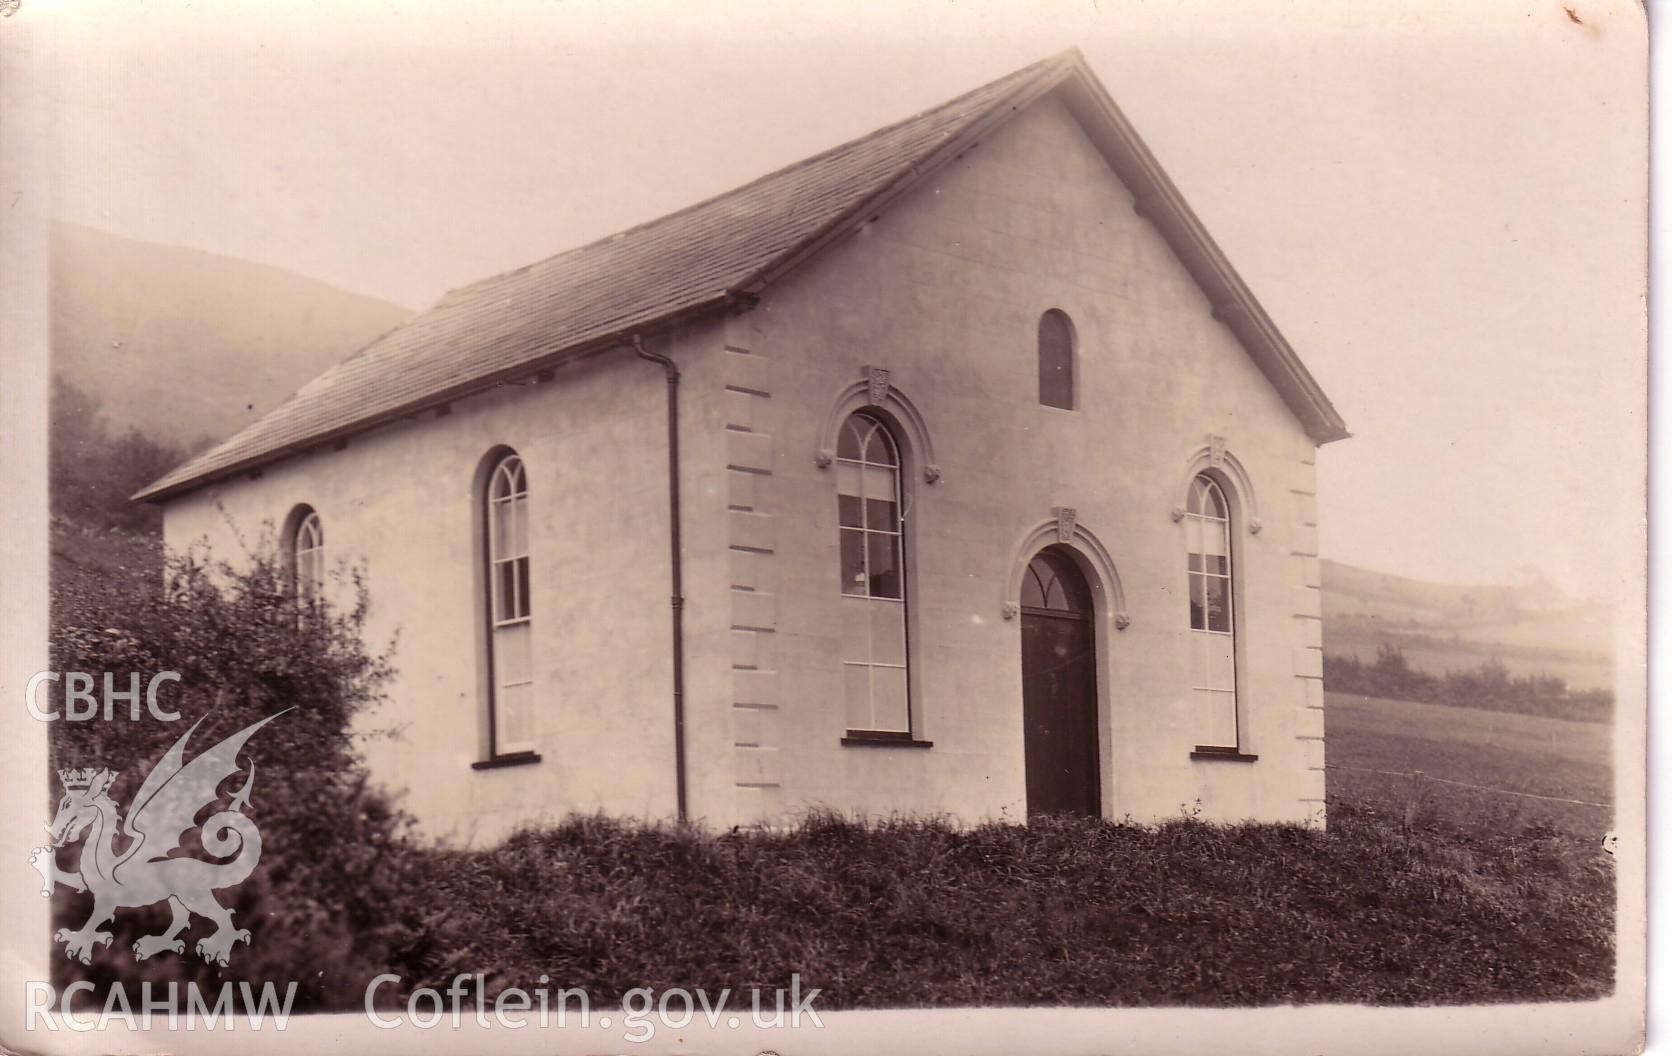 Digital copy of an original historic monchrome photograph of Bethlehem Chapel, Cwmerfyn, in the possession of W.J. Edwards.